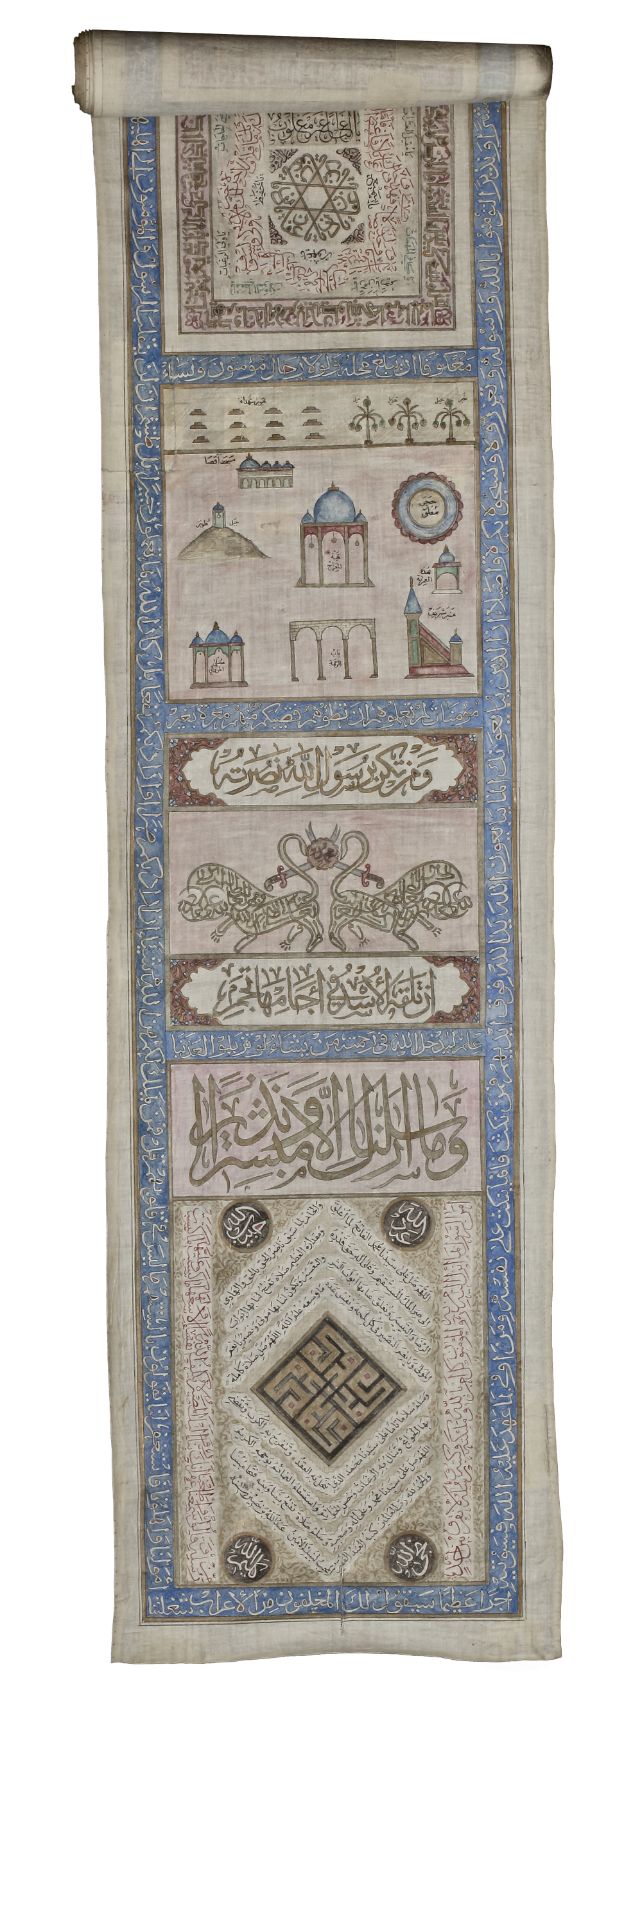 AN OTTOMAN ILLUMINATED HAJJ SCROLL, WRITTEN BY ABDUL-ALAH BIN HUSSAIN IN 1287 AH/1873 AD - Image 10 of 12